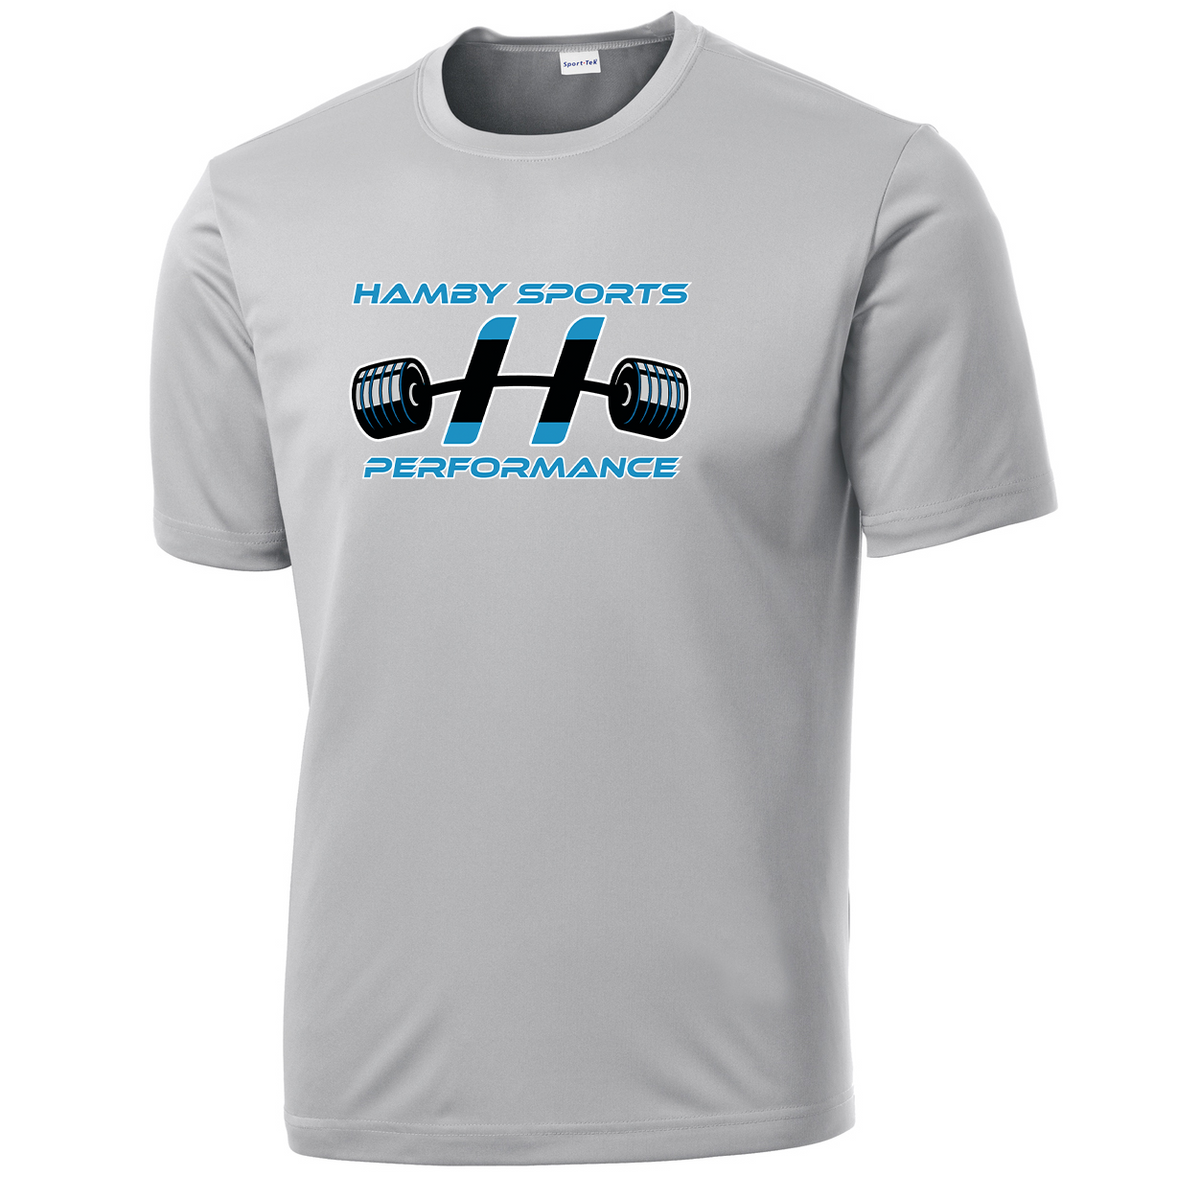 Hamby Sports Performance Performance T-Shirt